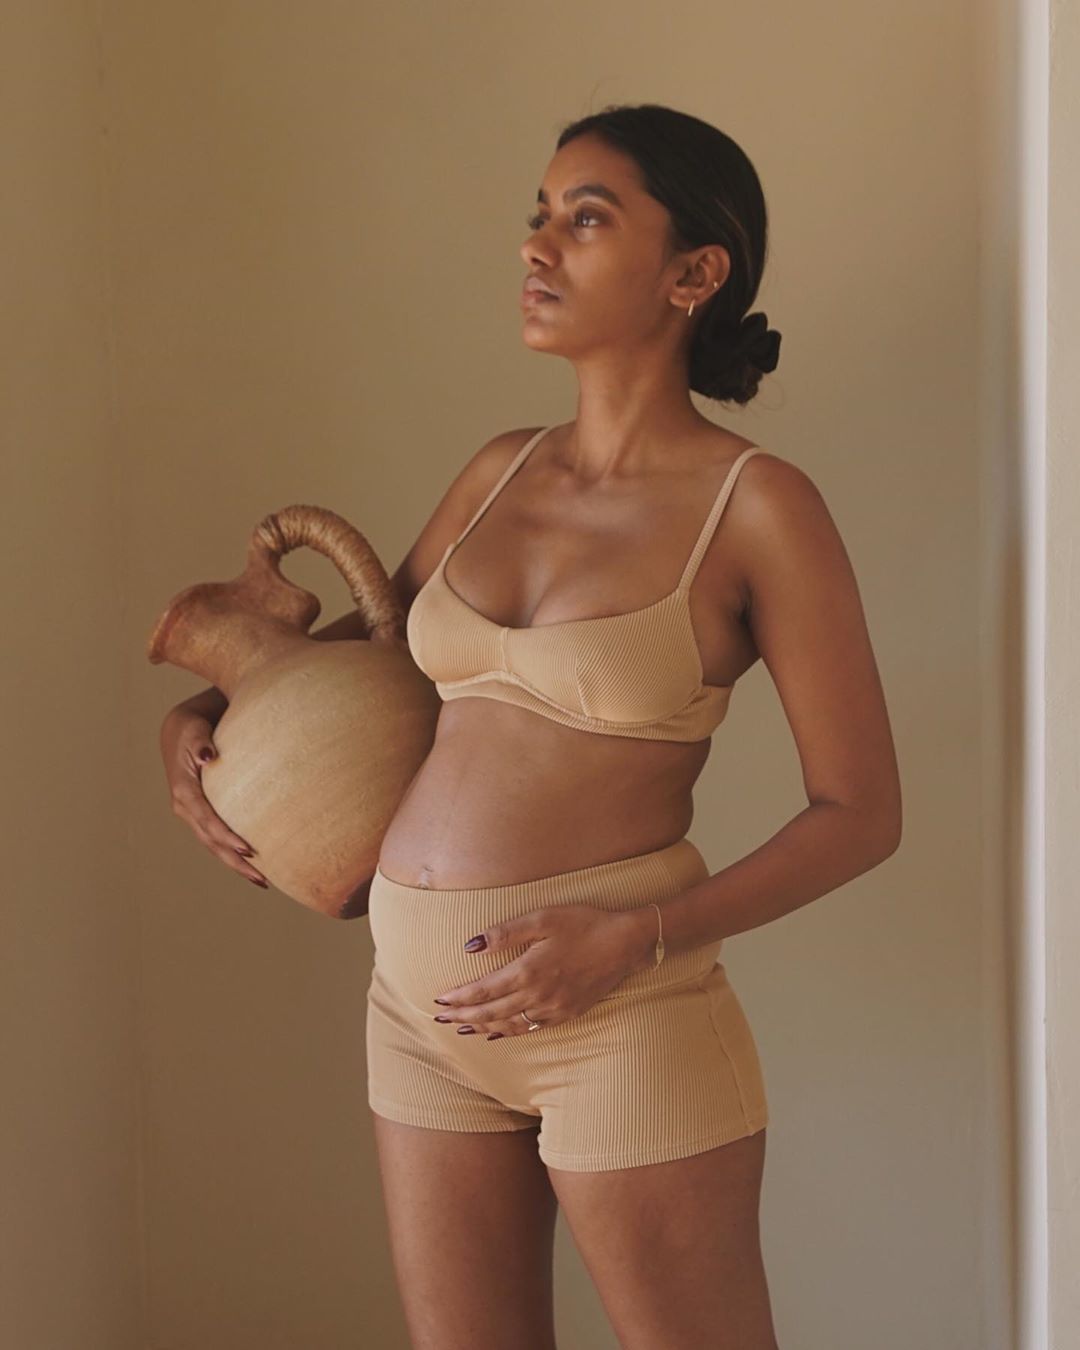 Best maternity bras